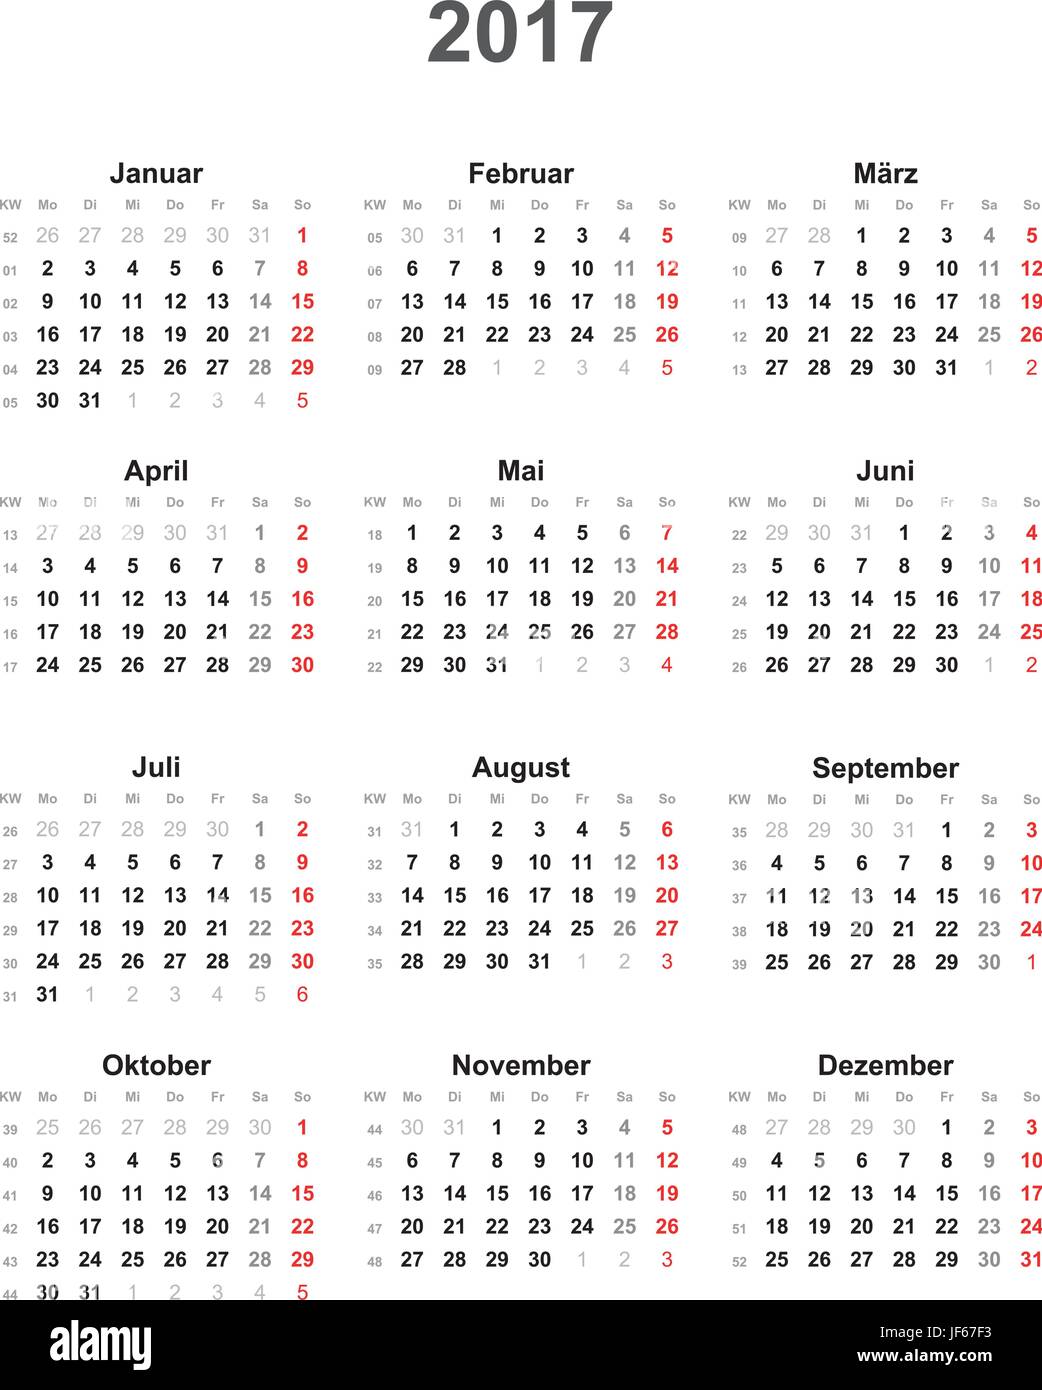 Theoretisch Groet nietig Kalender mit kalenderwochen hi-res stock photography and images - Alamy